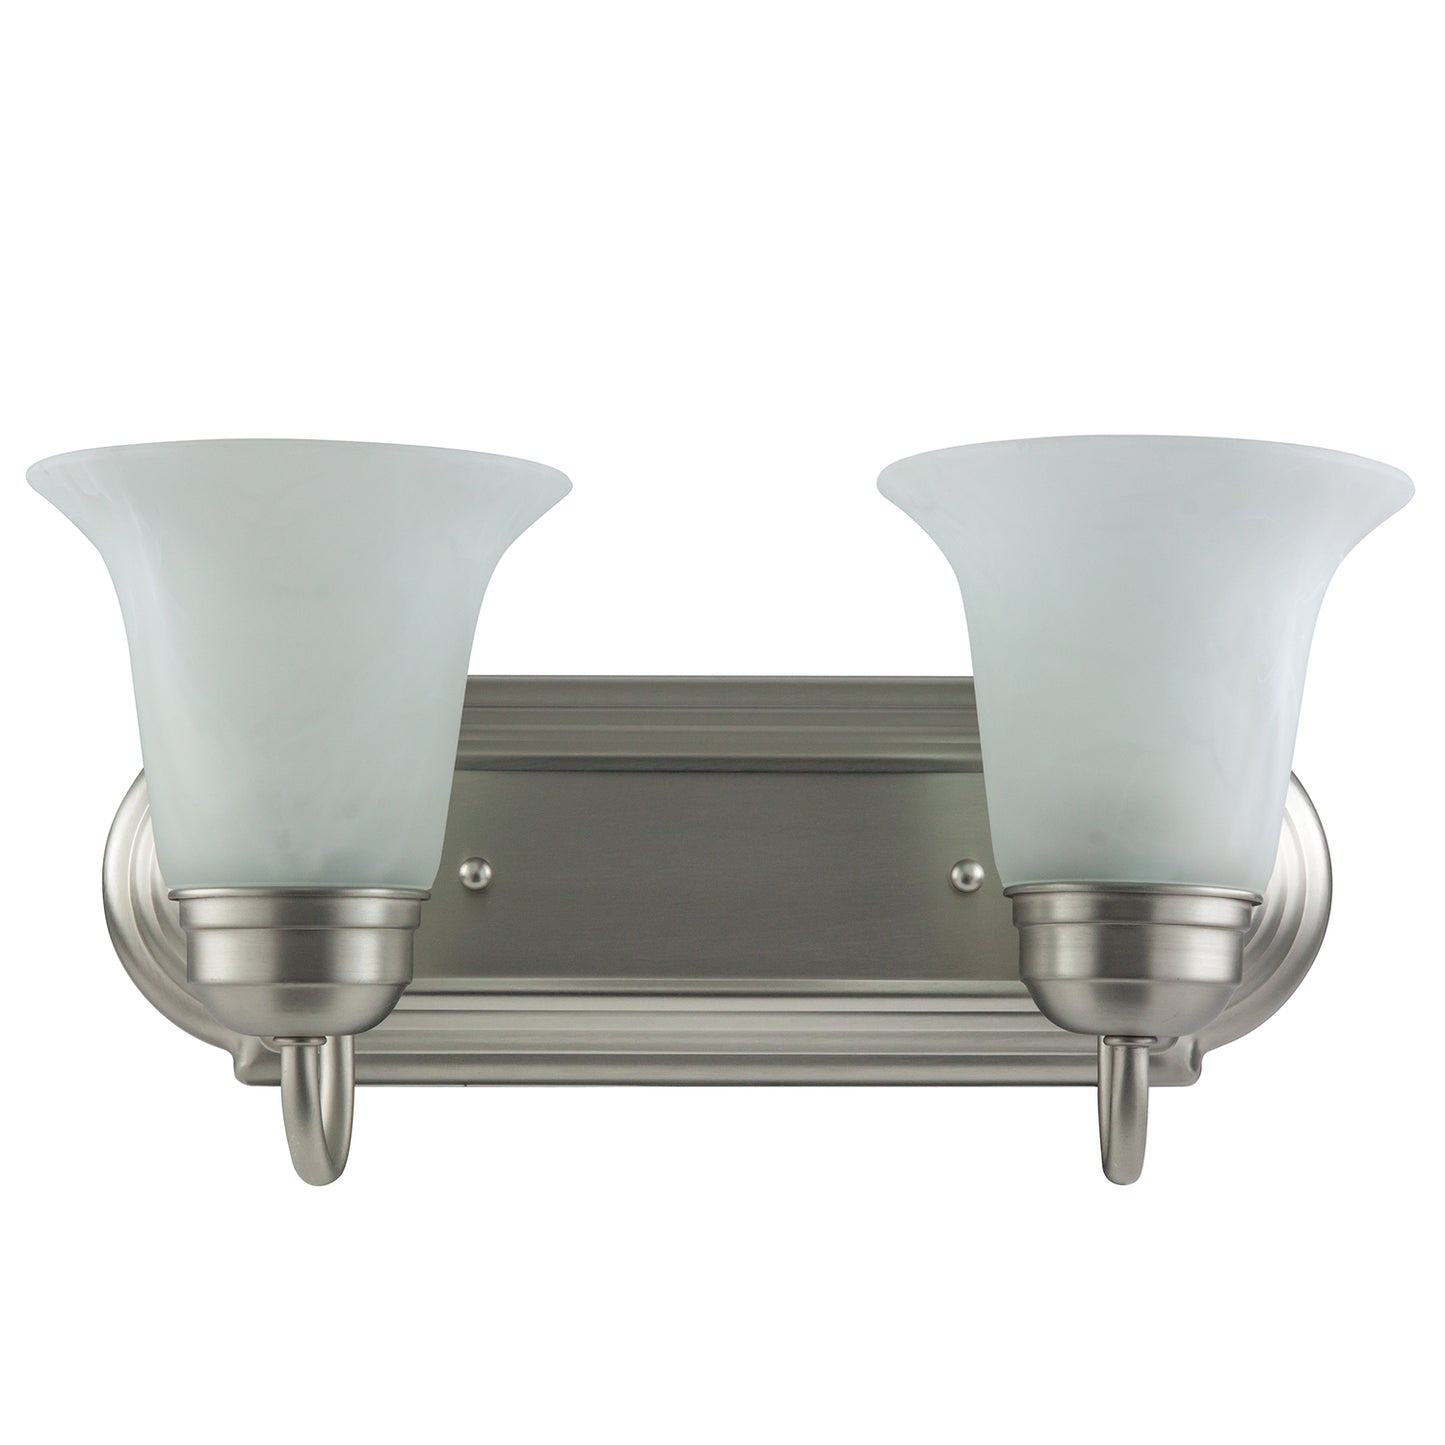 Sunlite - 2 Lamp Vanity Decorative Sconce Fixture, Brushed Nickel Finish, Alabaster Glass